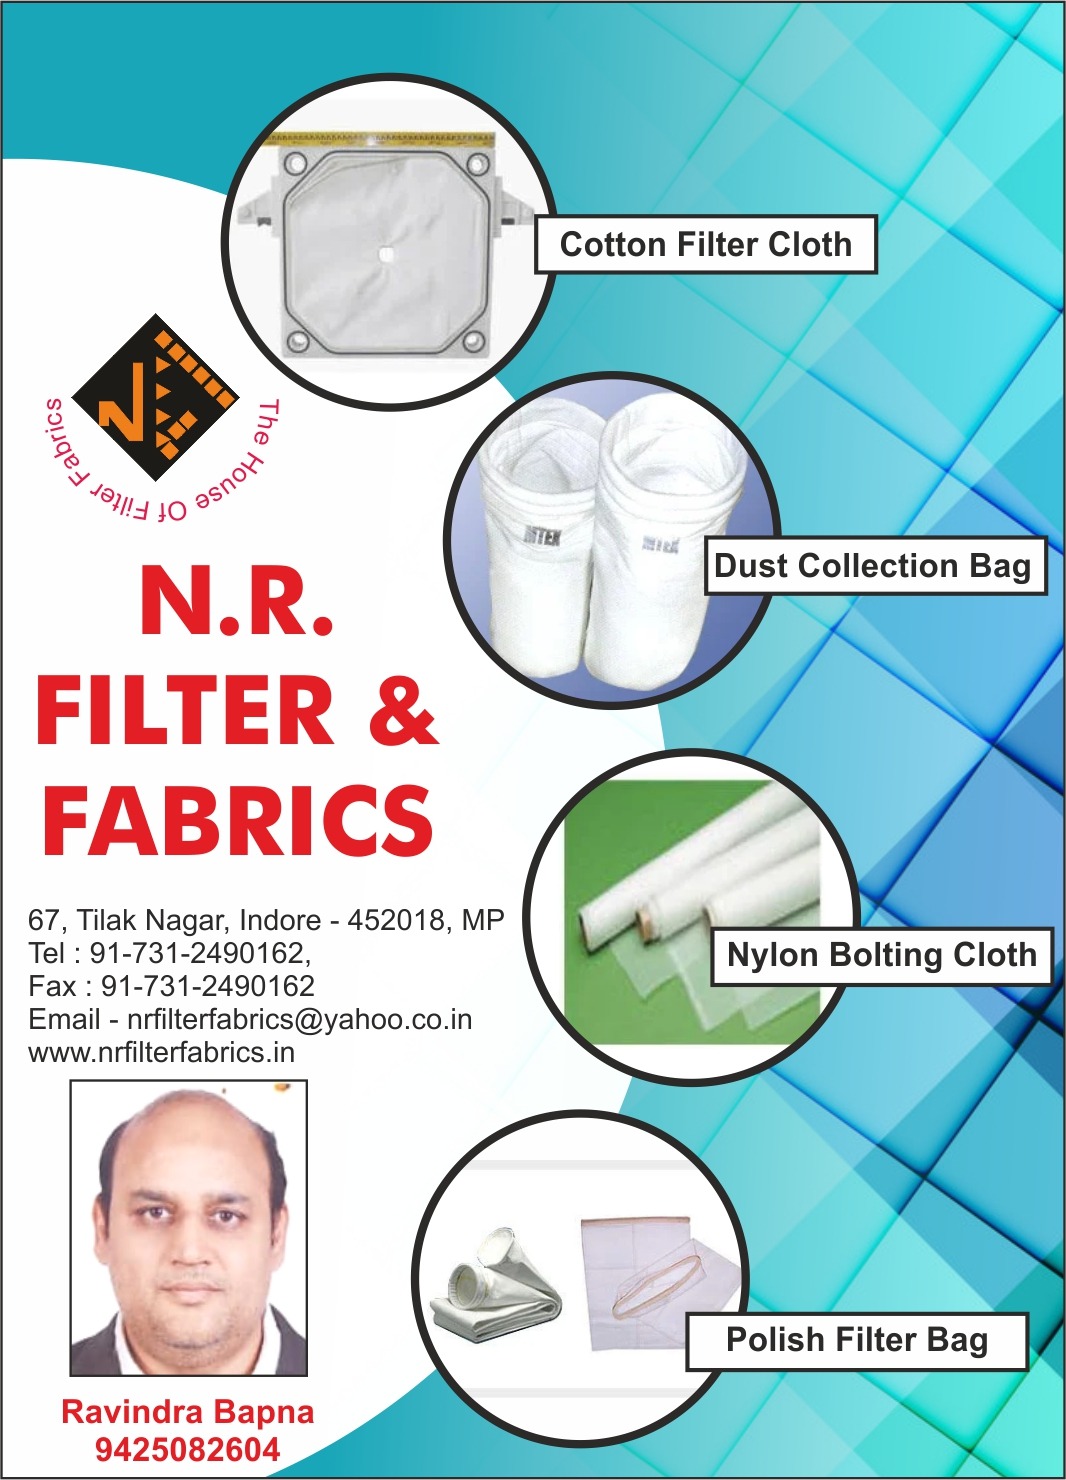 N. R. Filter & Fabrics